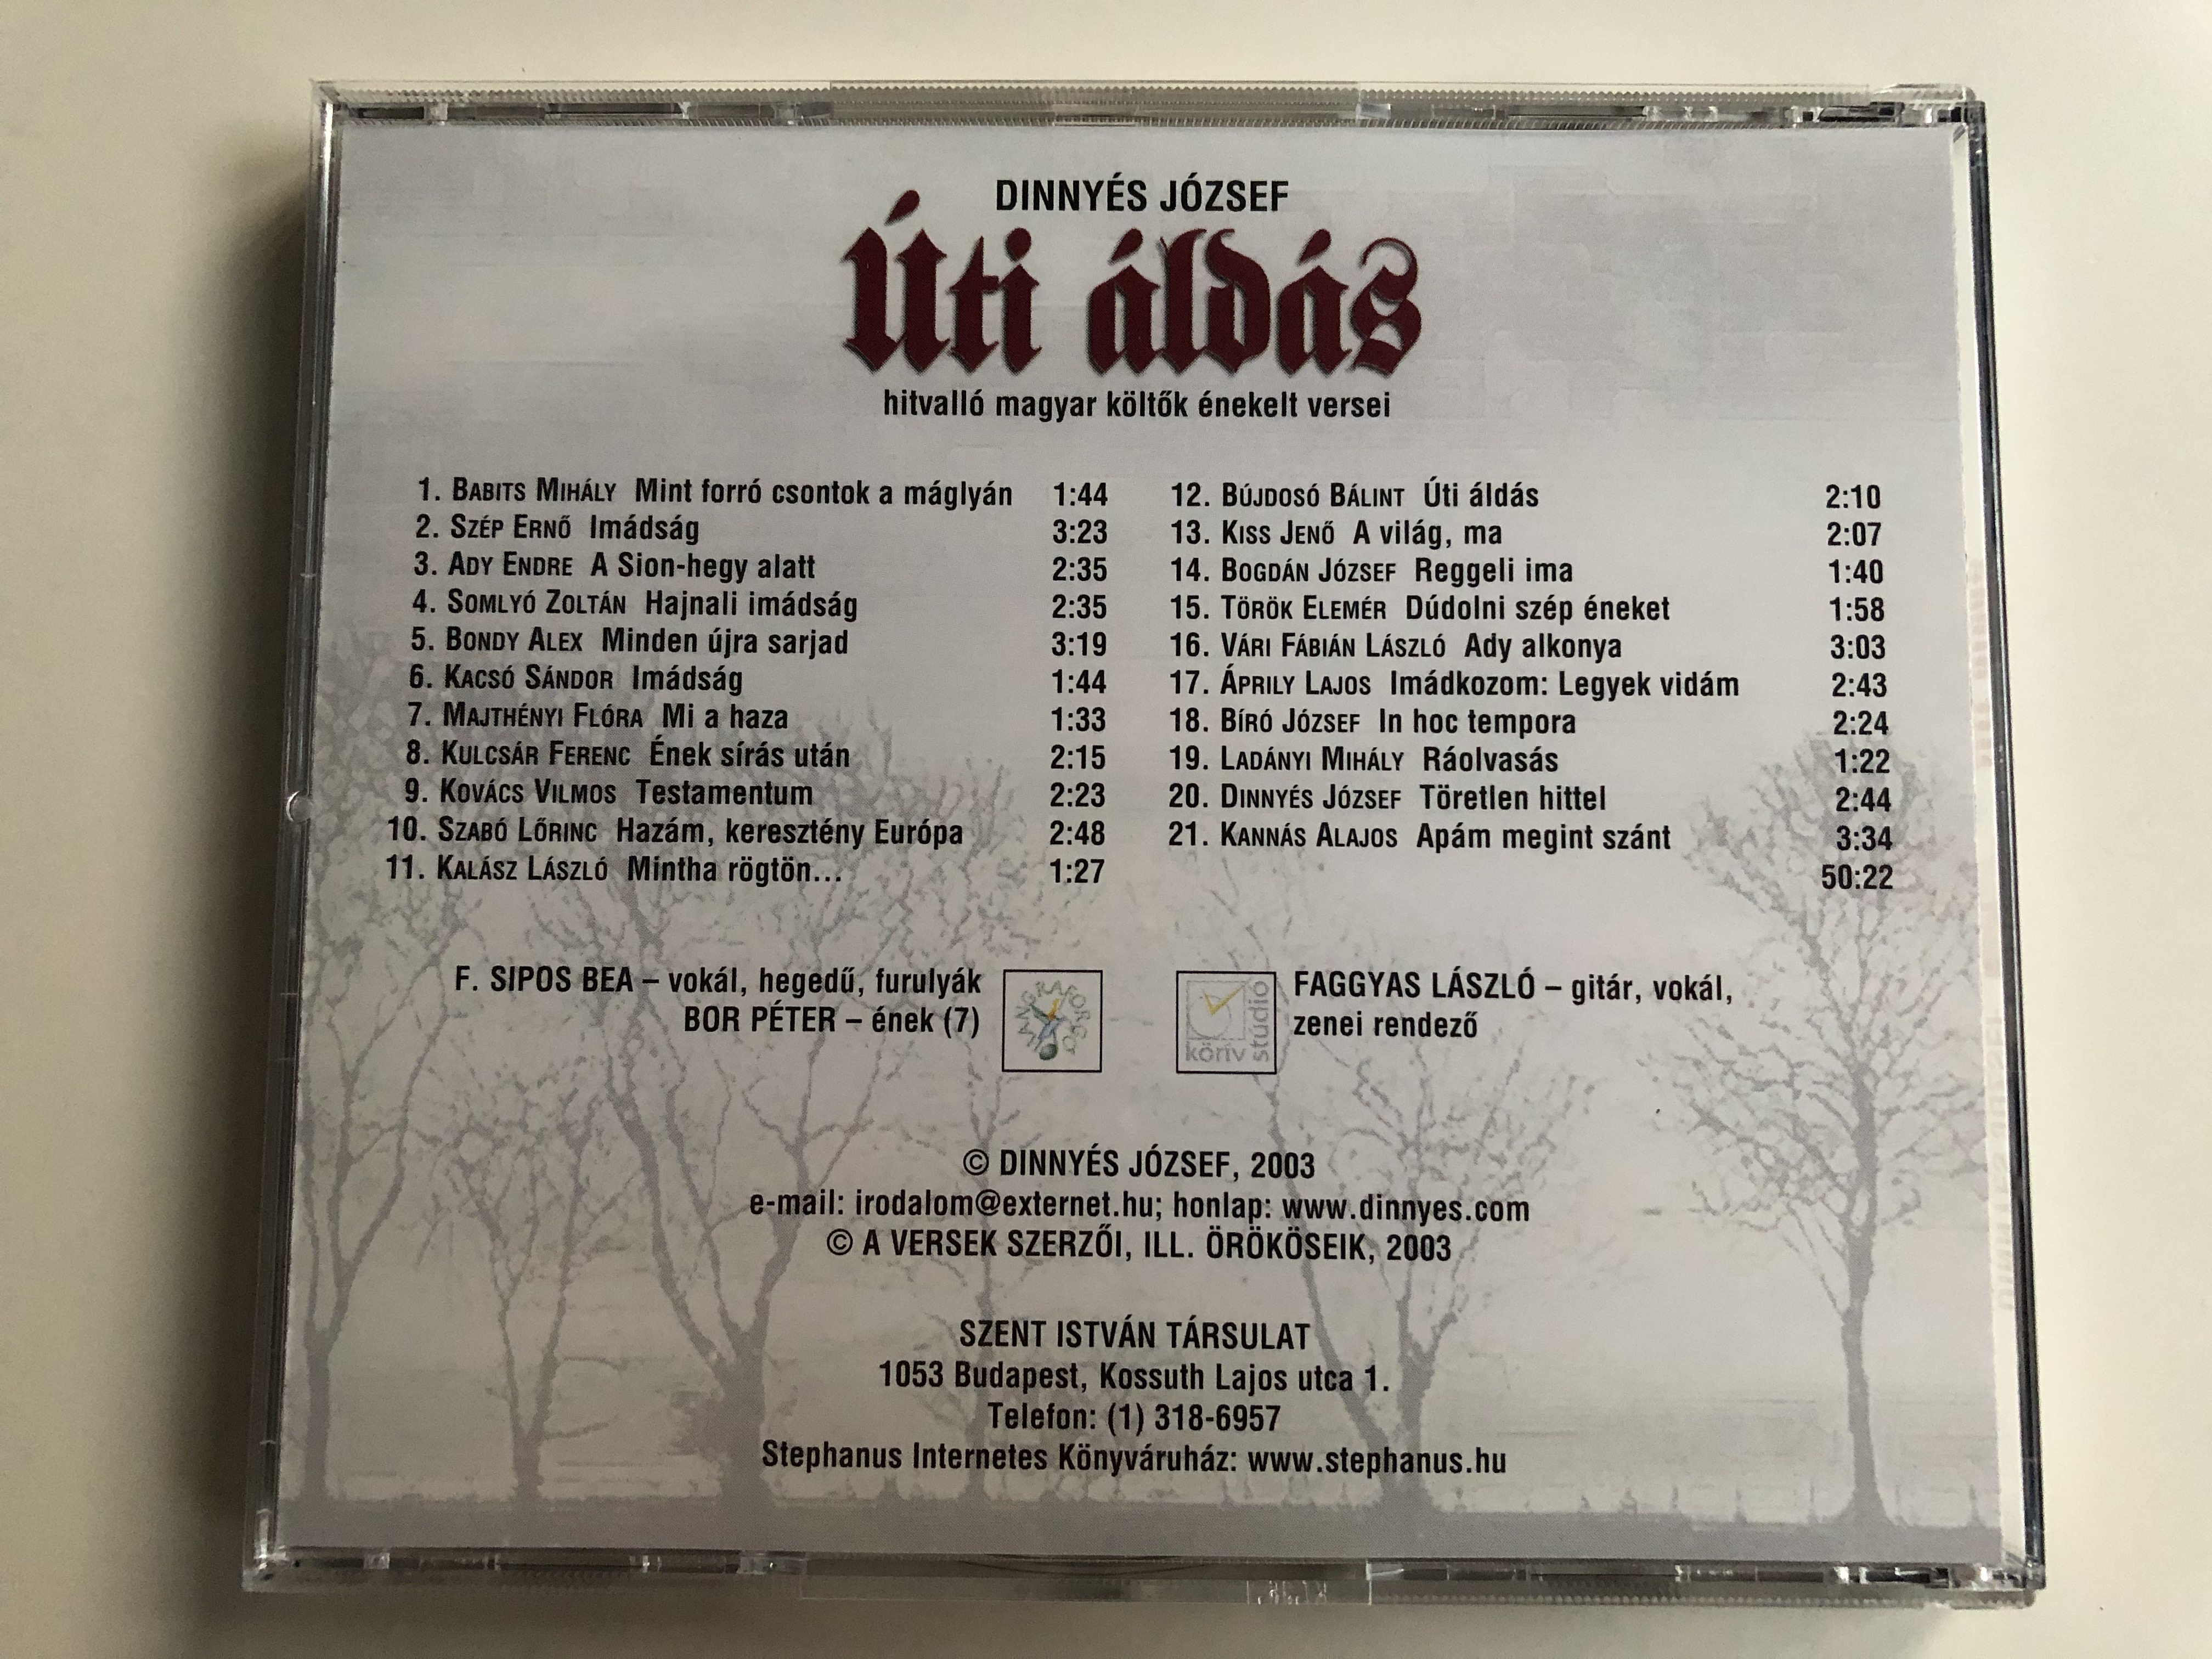 dinnyes-jozsef-uti-aldas-hitvallo-magyar-koltok-enekelt-versei-dinnyes-jozsef-audio-cd-2003-dj-2003-10-4-.jpg